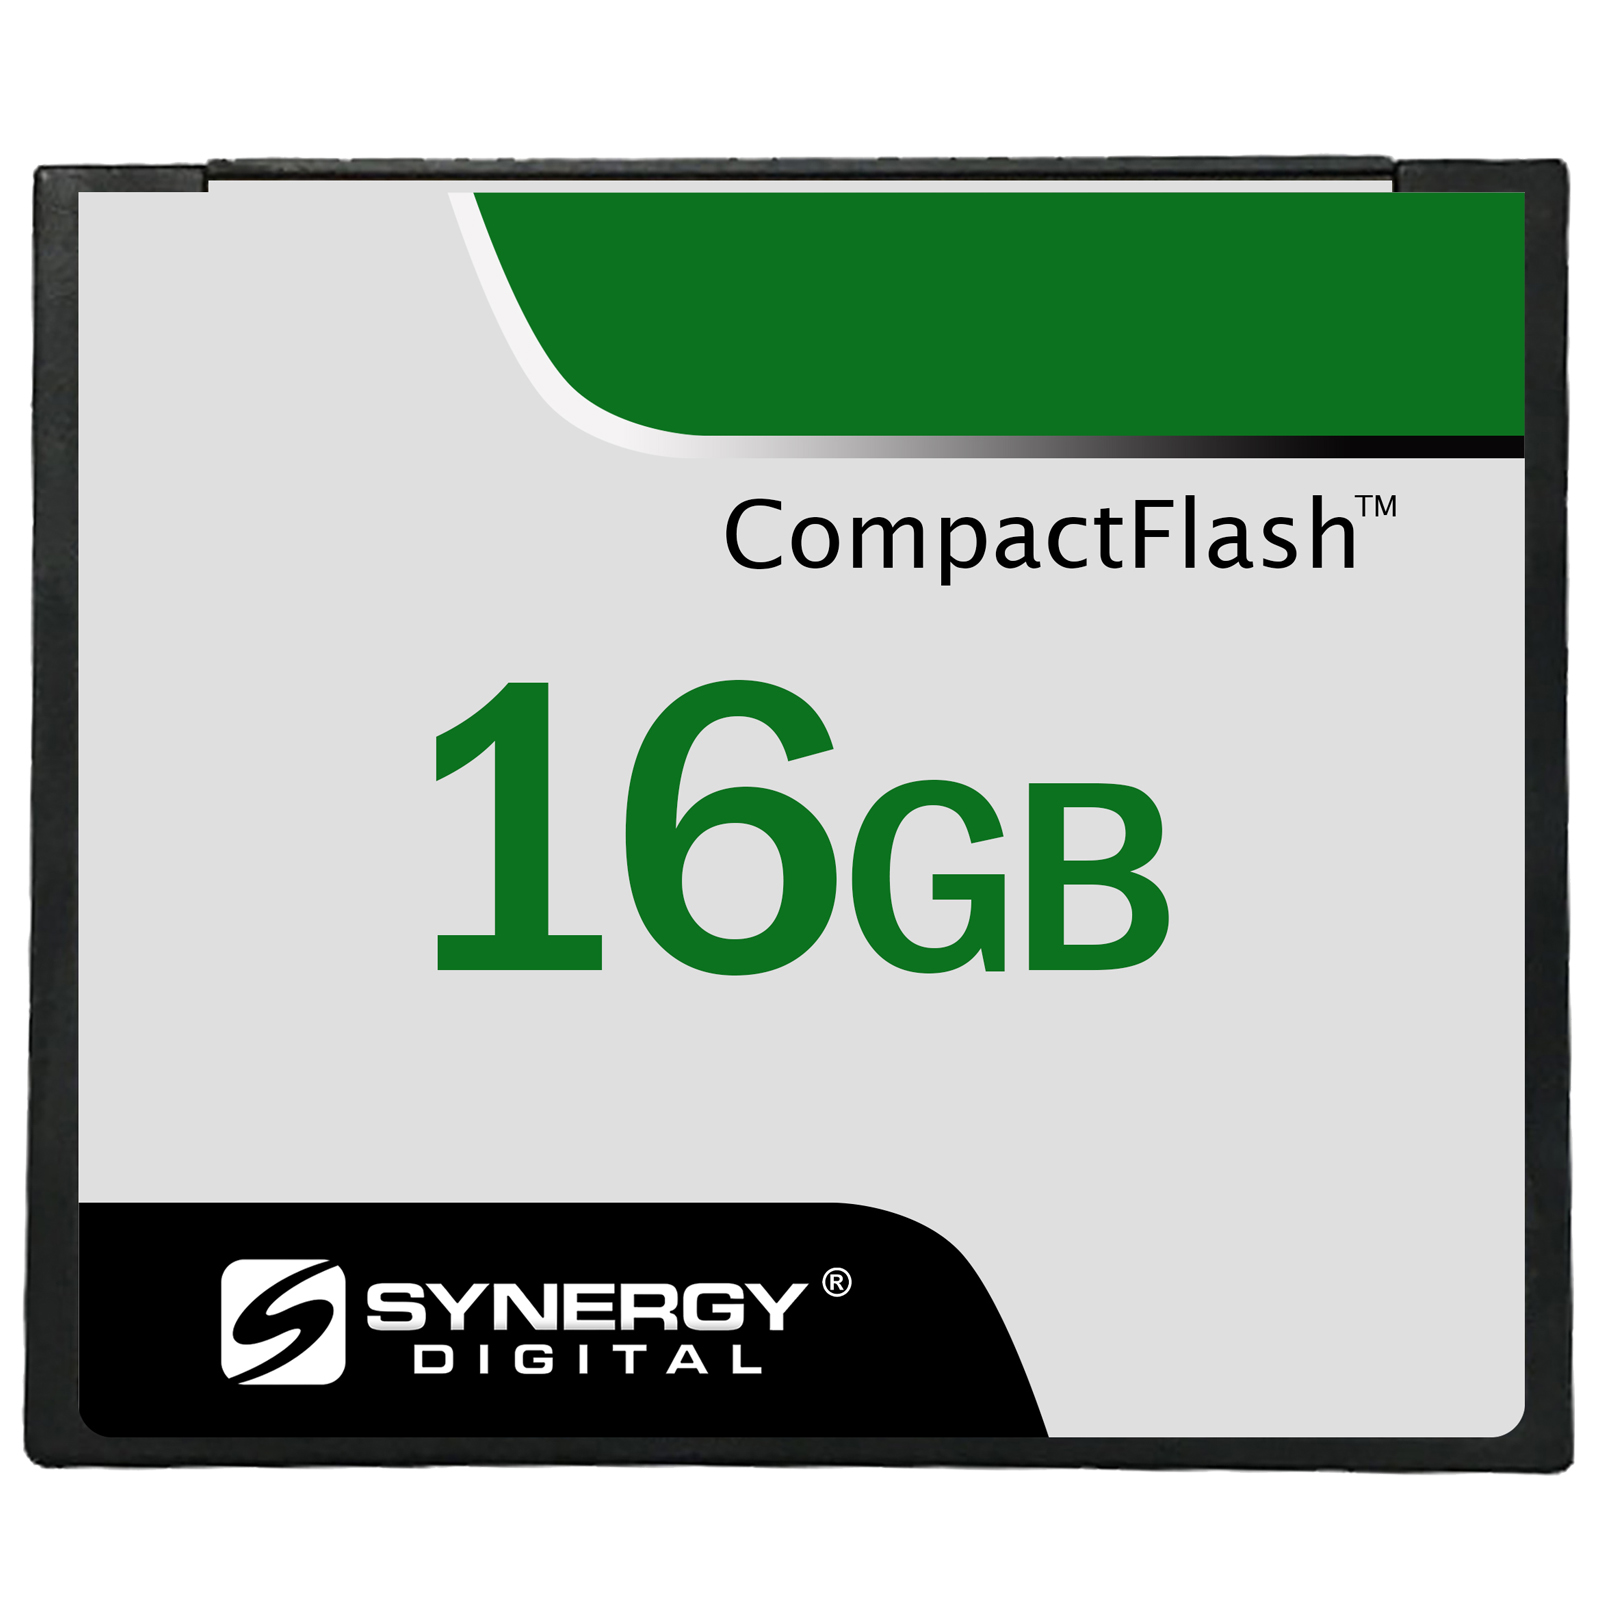 DA-CF-16GB-R | 16GB CompactFlash Memory Card